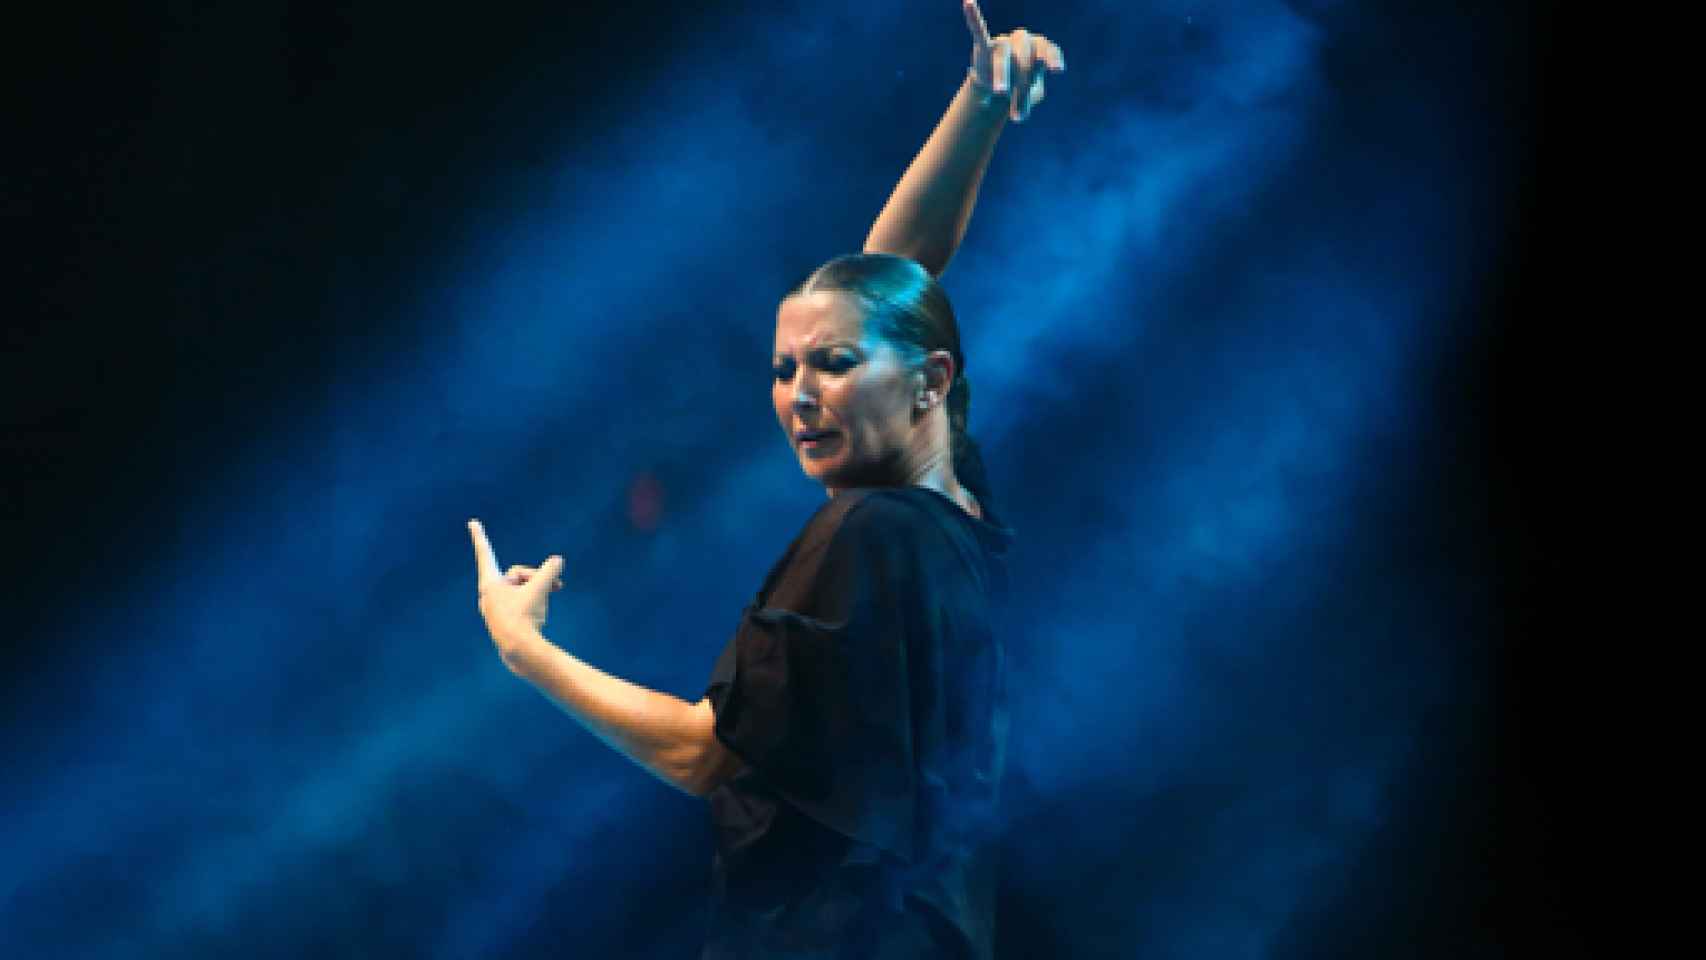 Image: Sara Baras: En el flamenco lo prioritario es la verdad